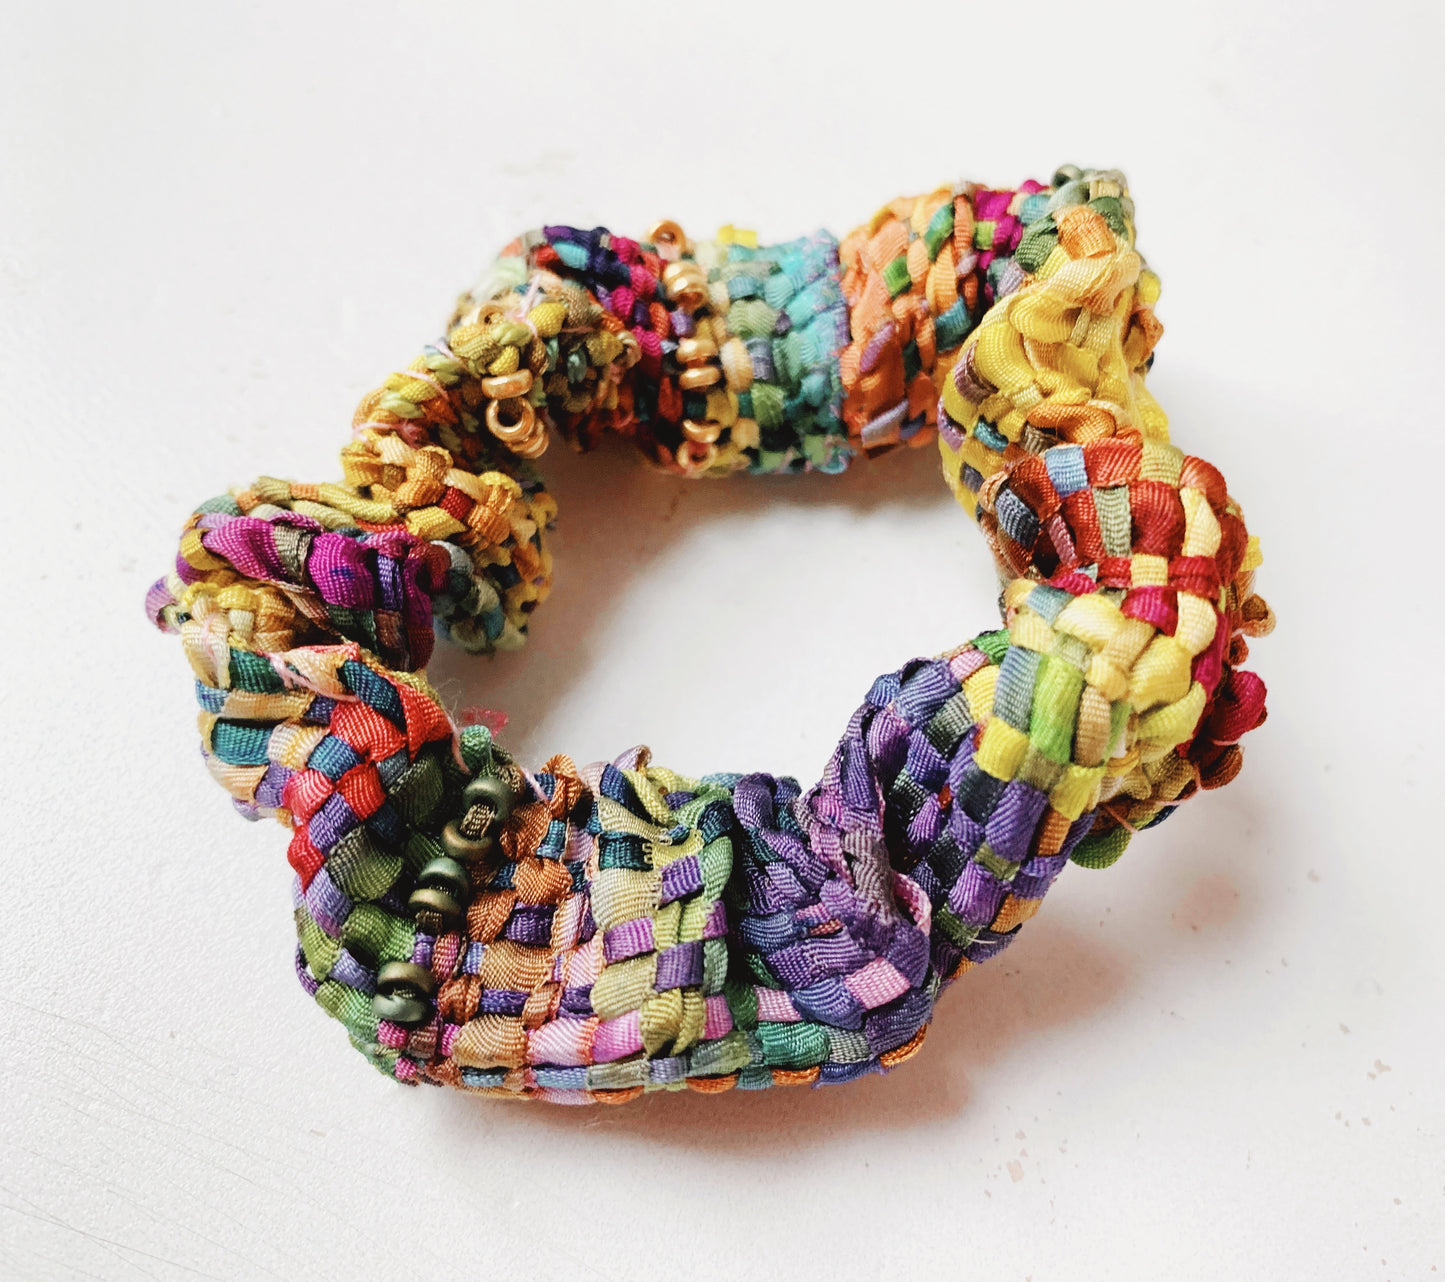 Quick Gift: A Hand-Woven Scrunchie